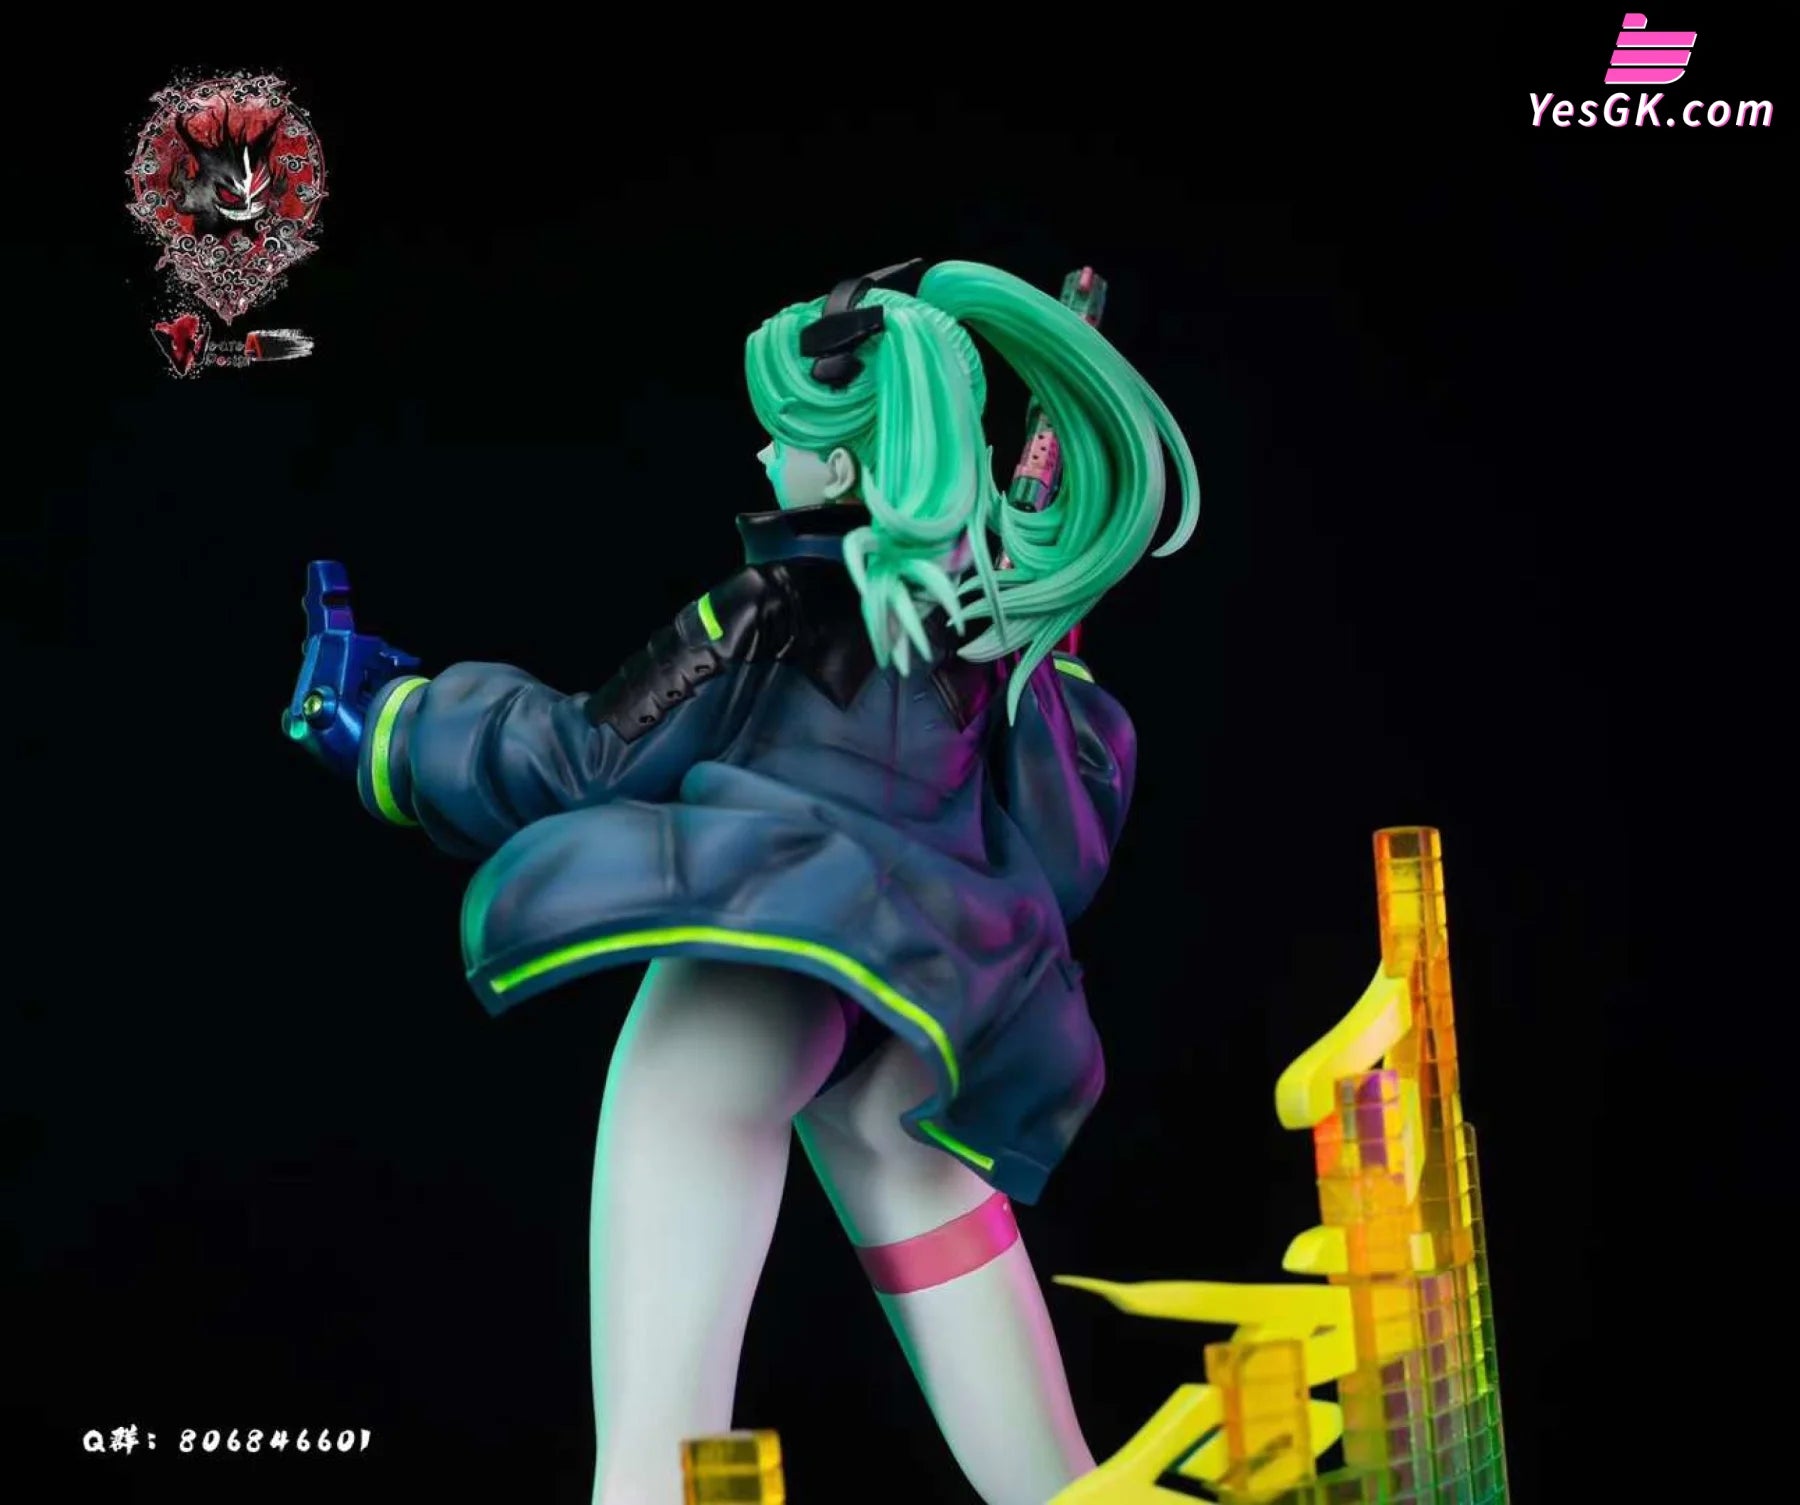 1/6 Scale Rebecca with LED - Cyberpunk: Edgerunners Resin Statue - ABsinthe  Studios [Pre-Order]